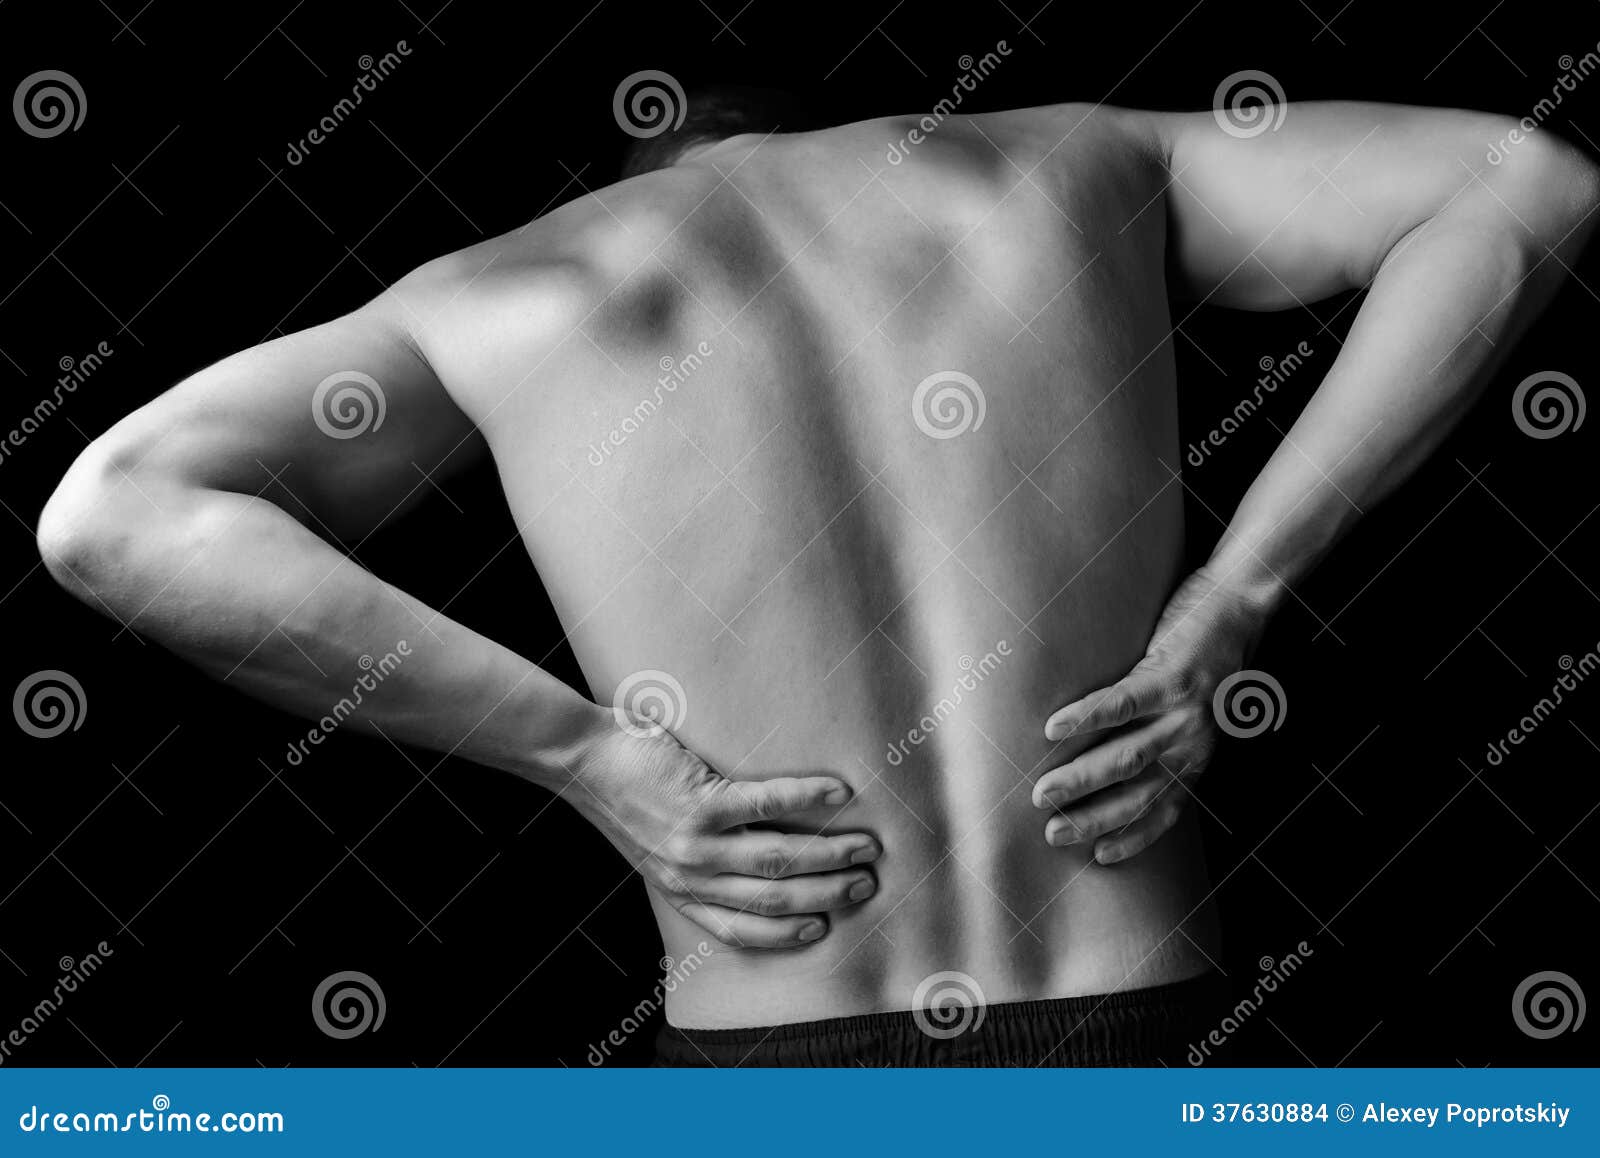 acute backache